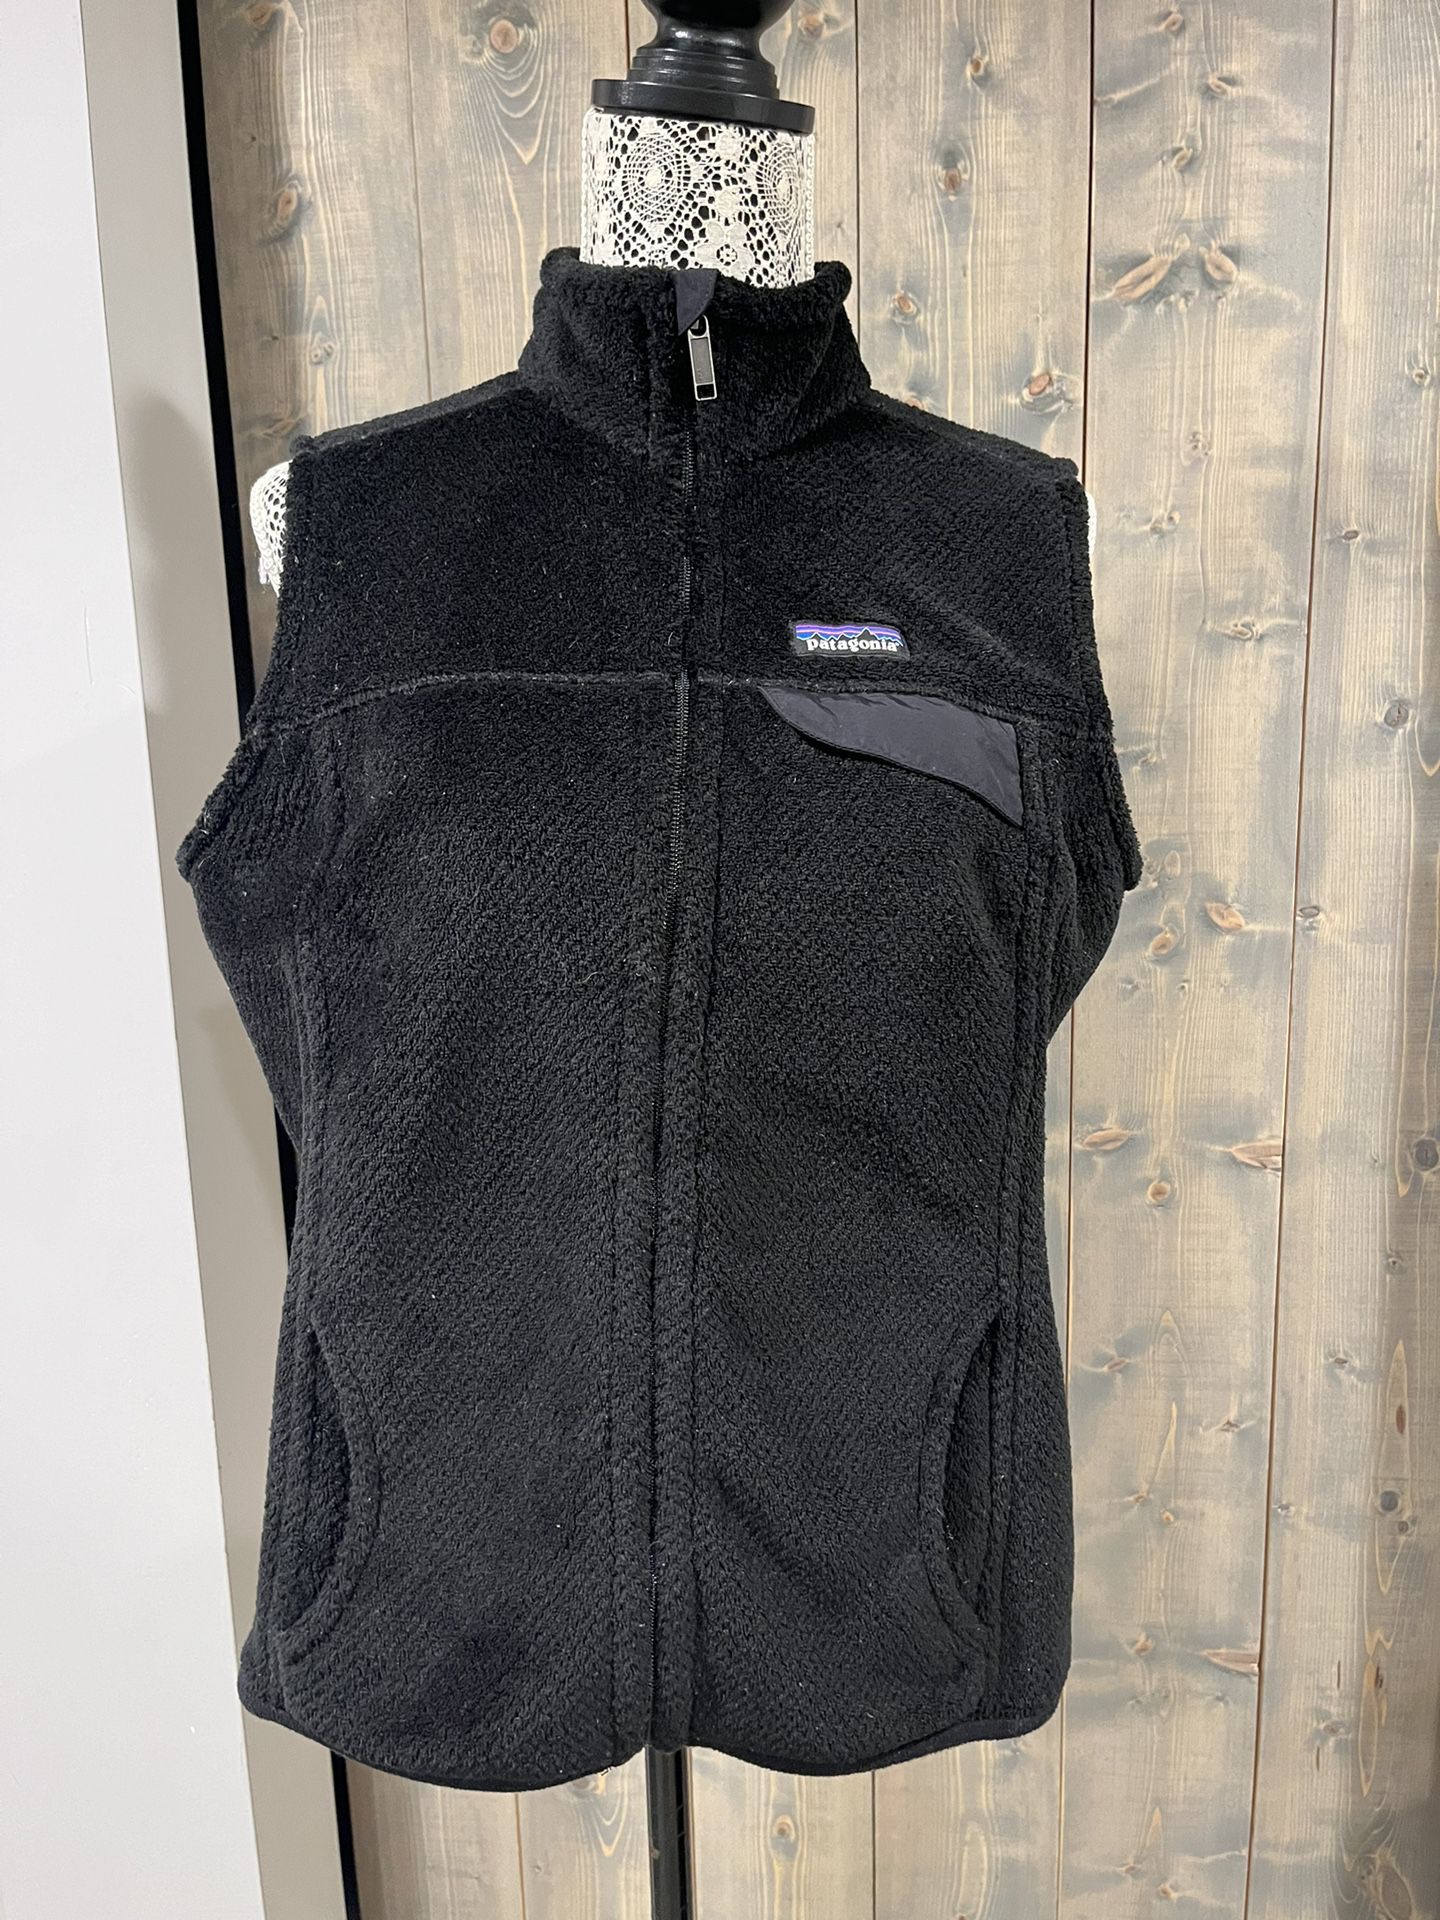 Patagonia L Size Black vest 